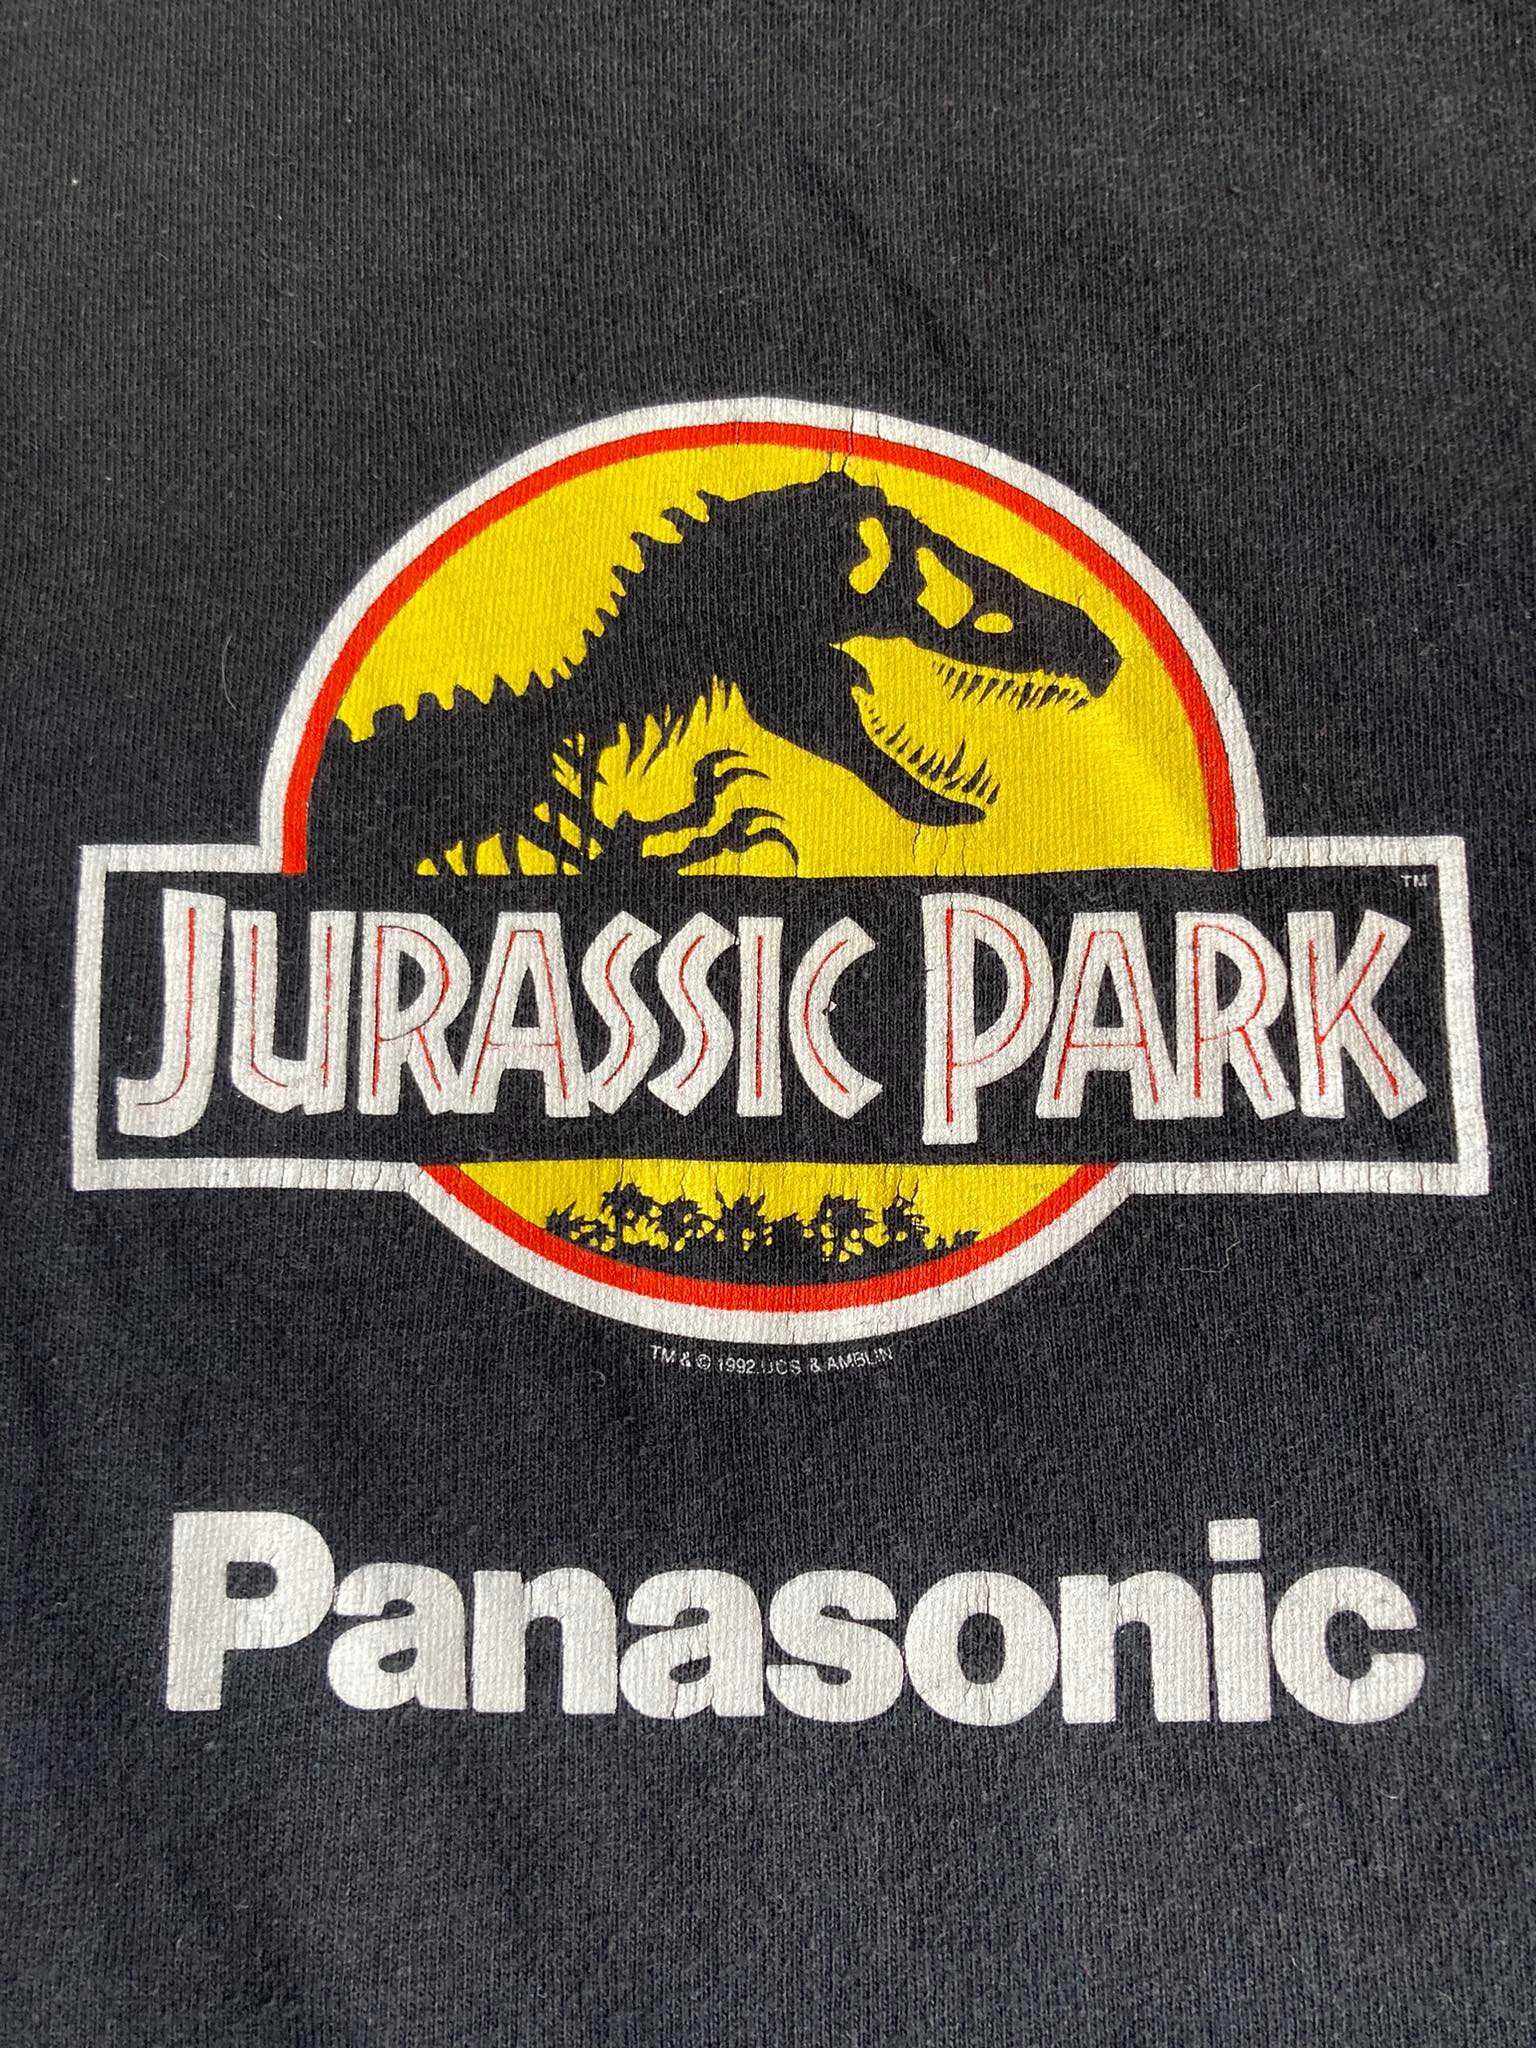 T-shirt Jurassic Park 1992r. Panasonic vintage Roz. S